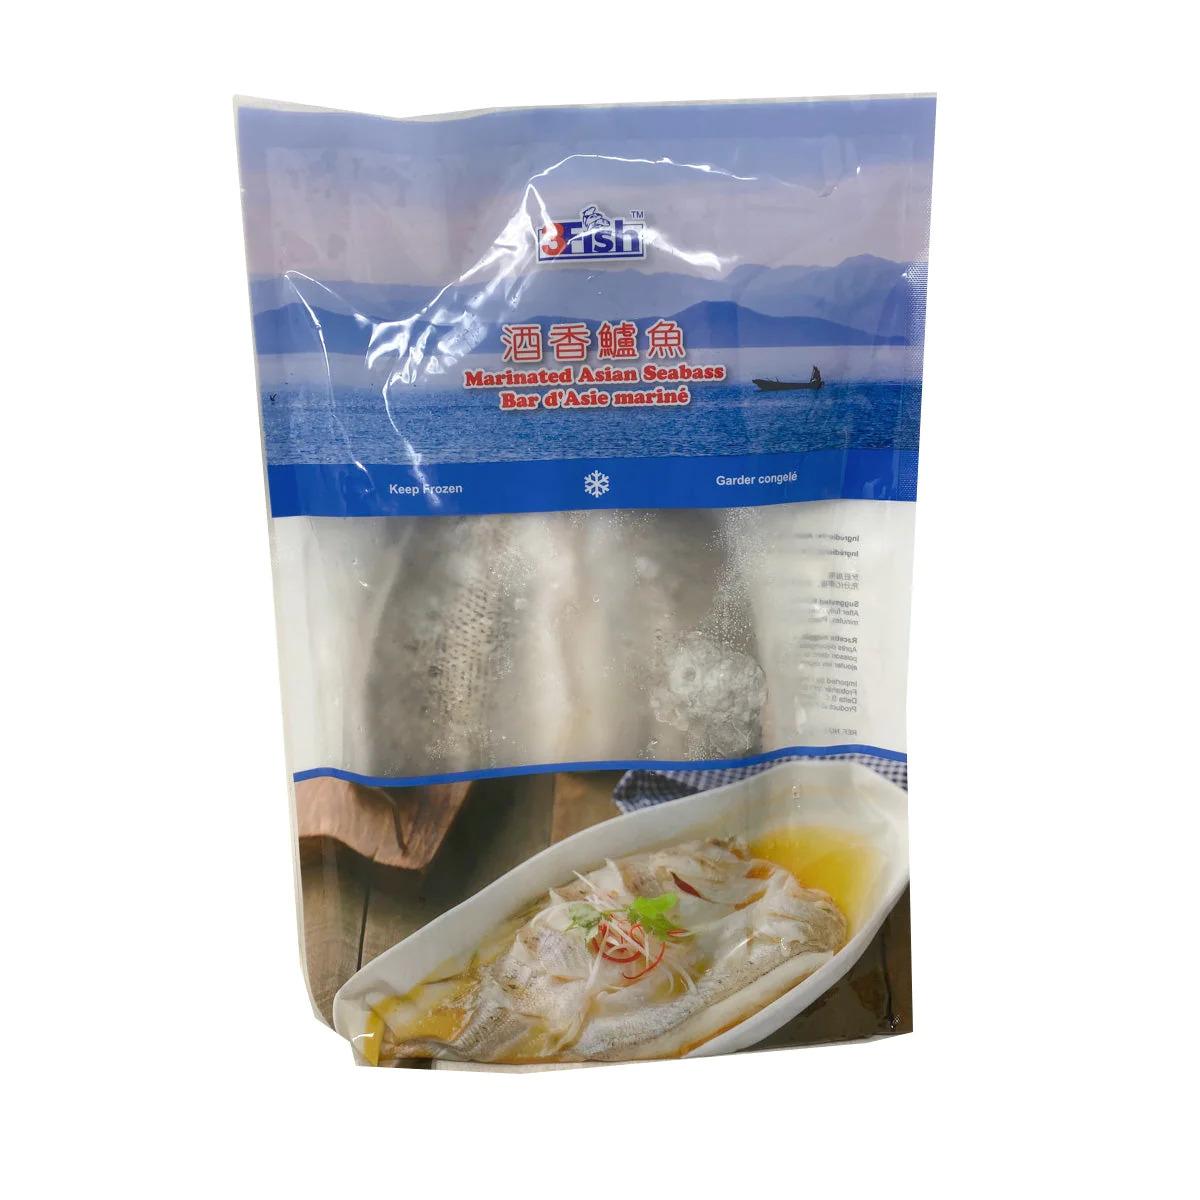 3fish-marinated-asian-seabass